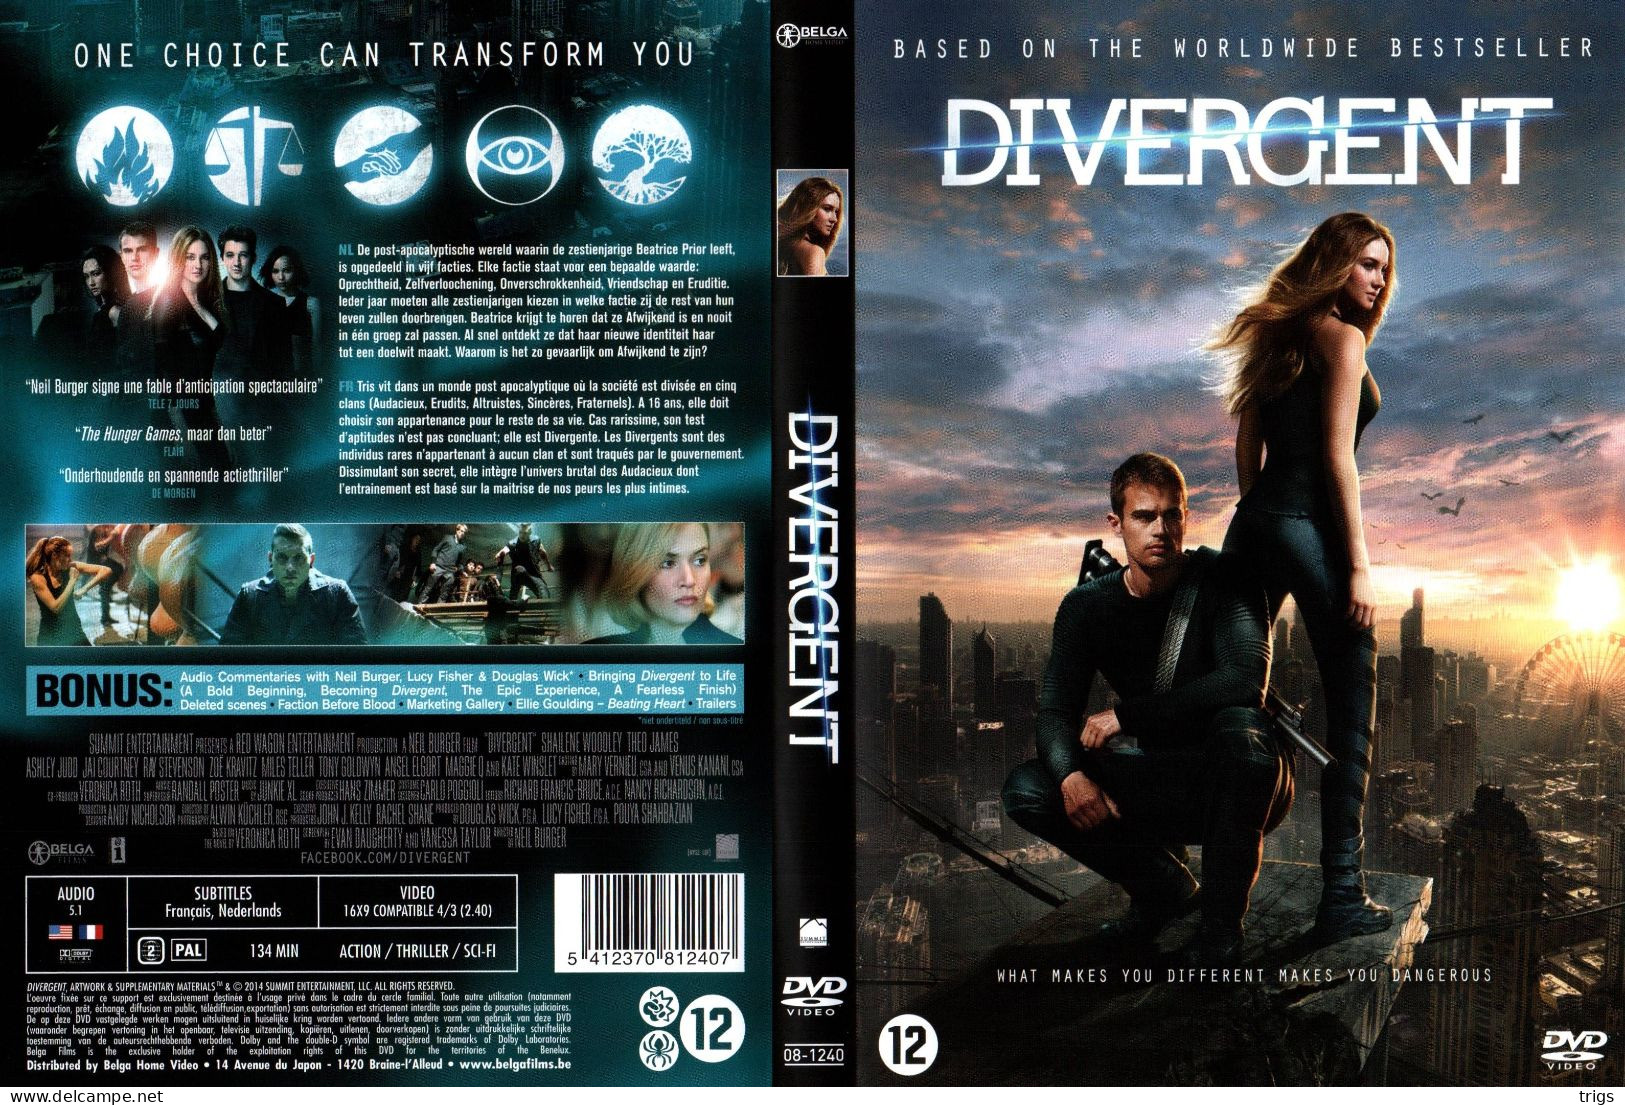 DVD - Divergent - Acción, Aventura